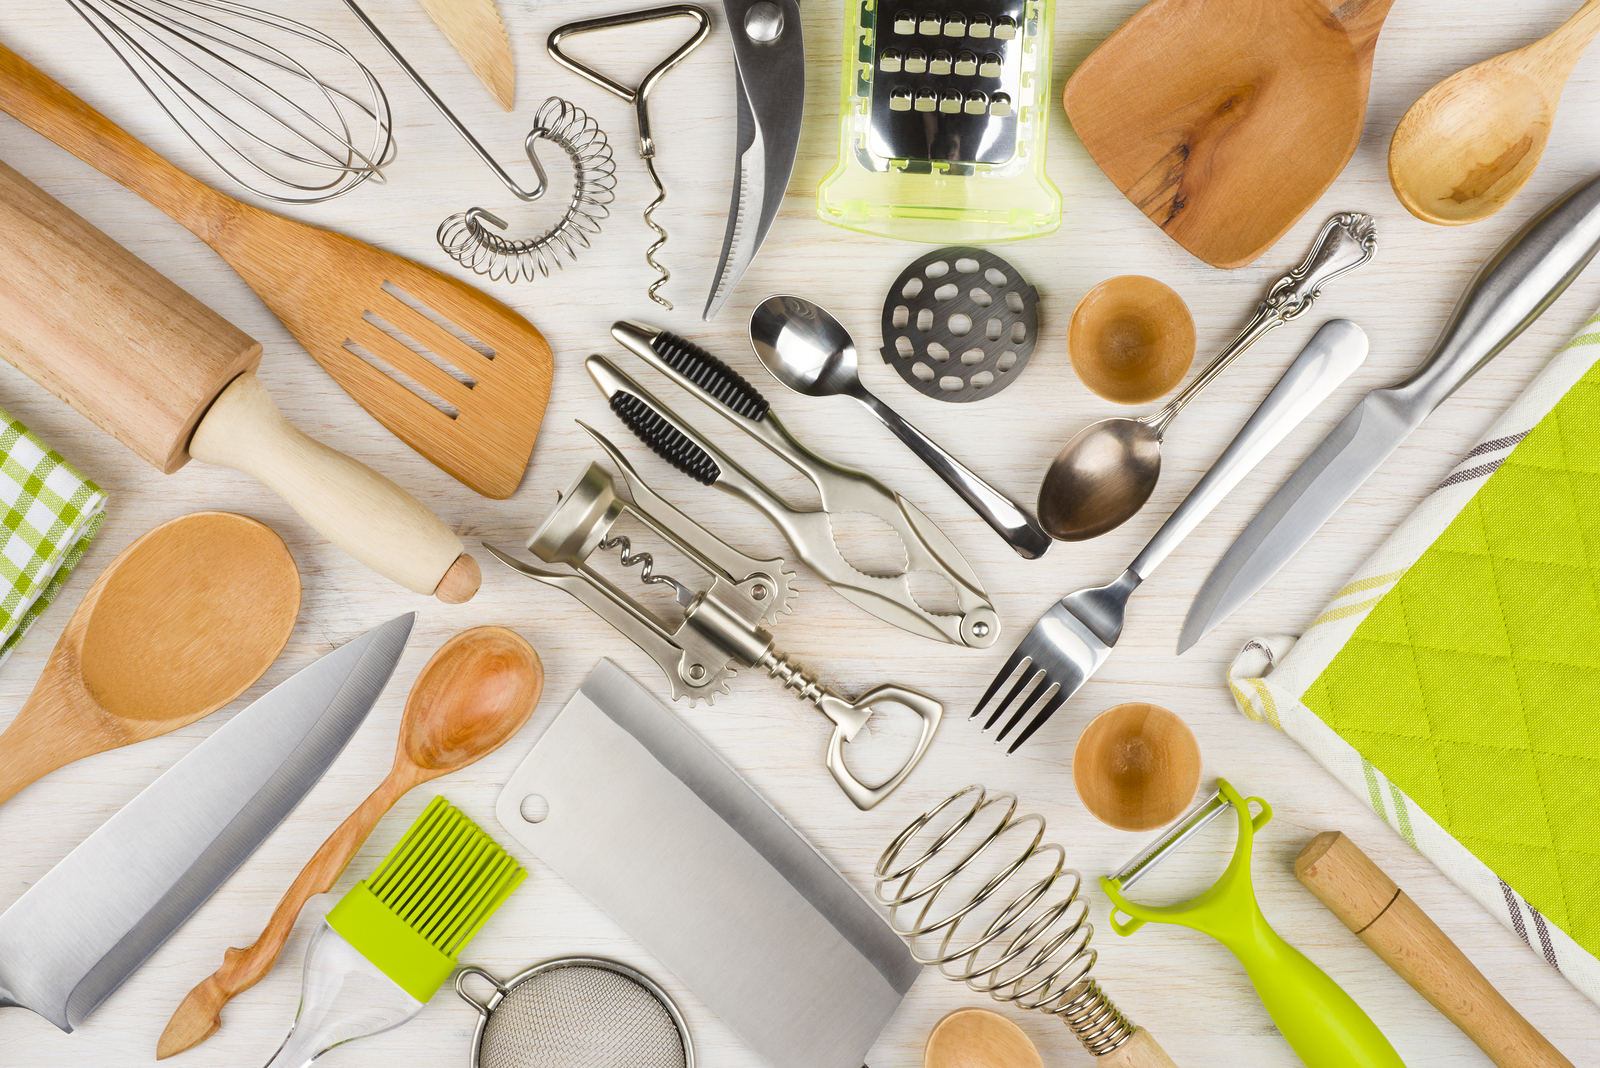 Get rid of kitchen clutter